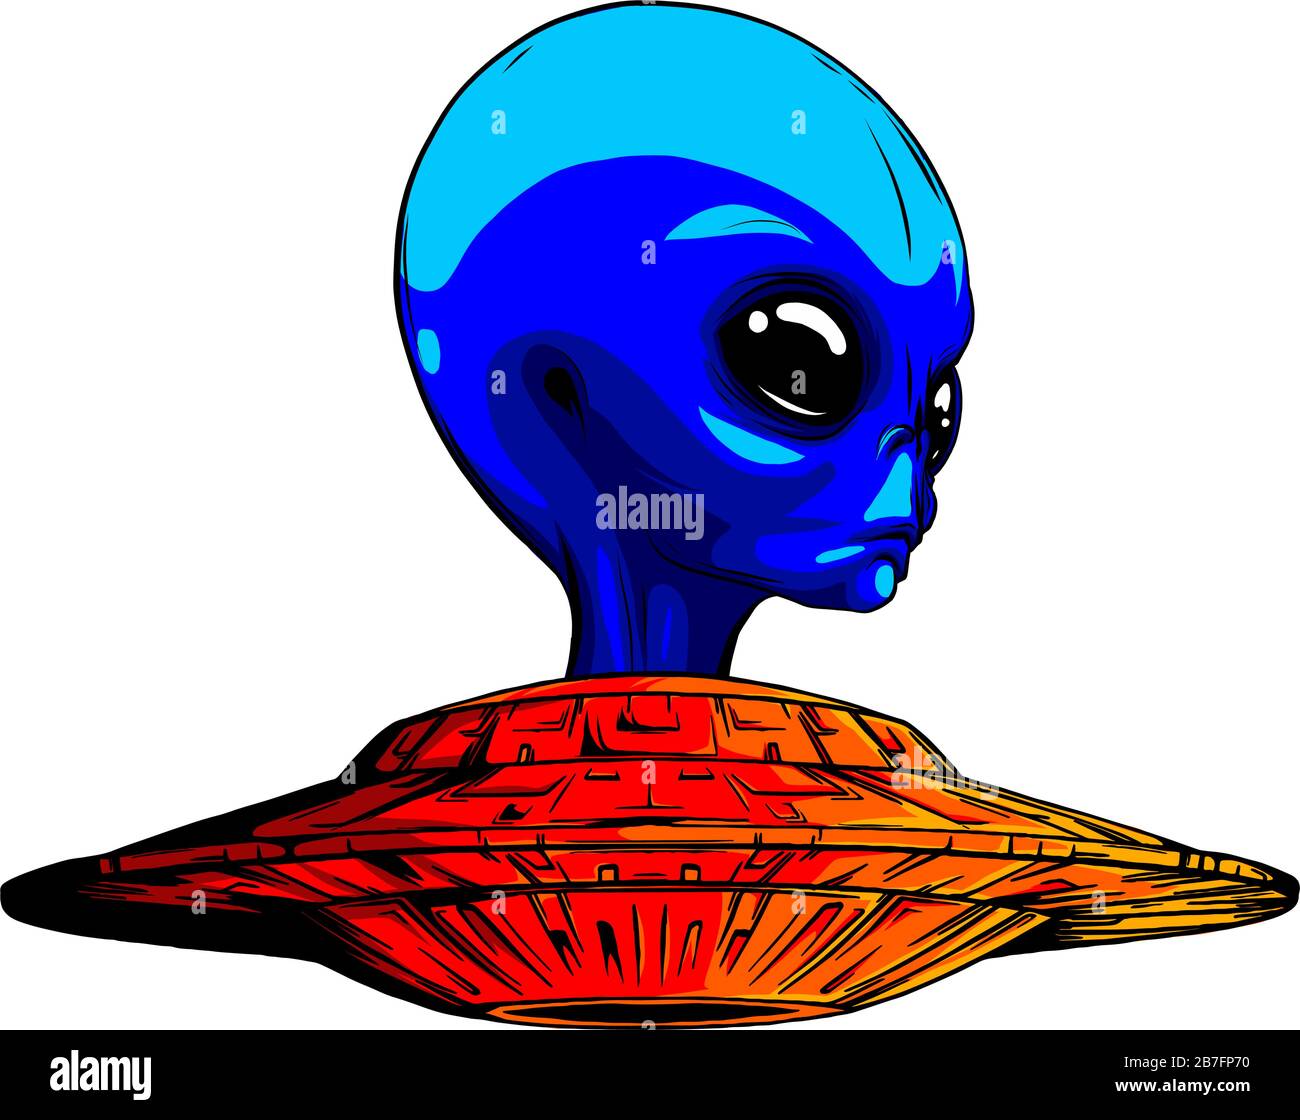 Alien ufo invasion vector illustration design art Stock Vector